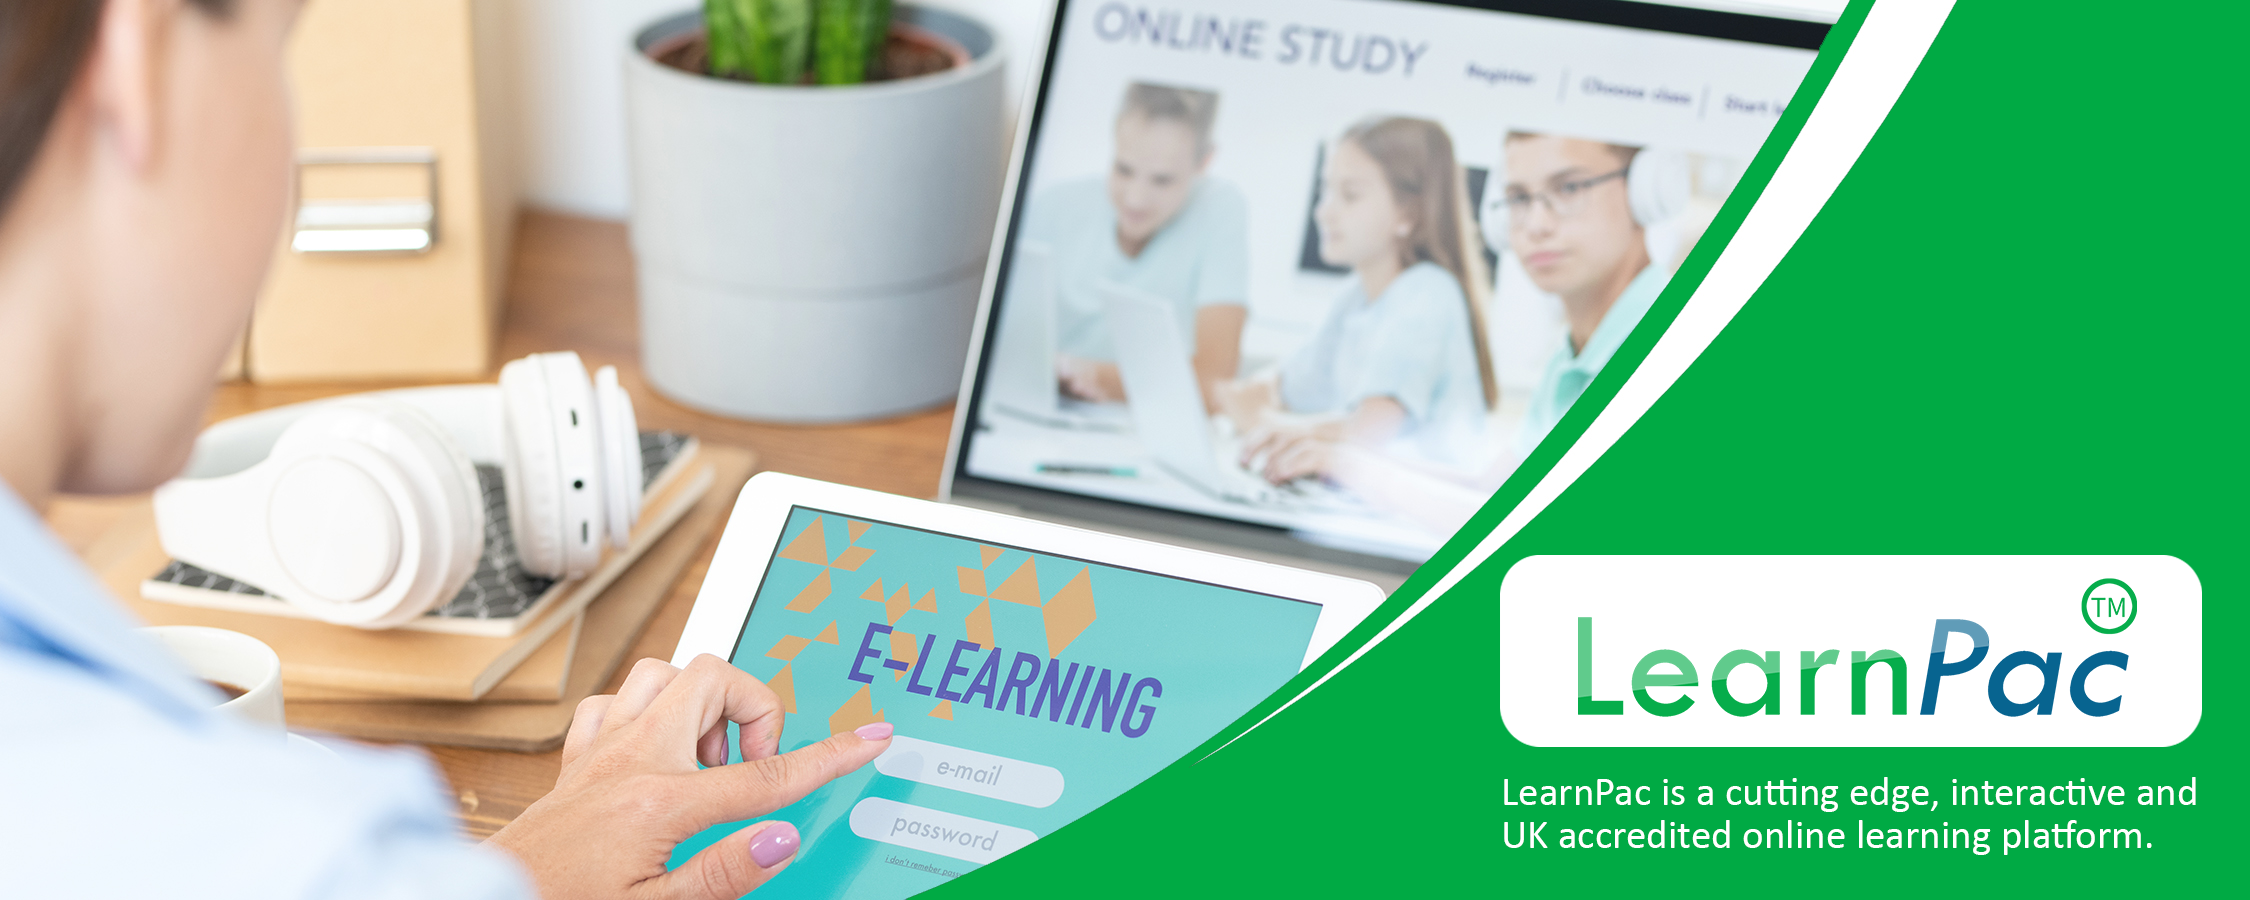 Managing Personal Finances Training - Online Learning Courses - E-Learning Courses - LearnPac Systems UK -